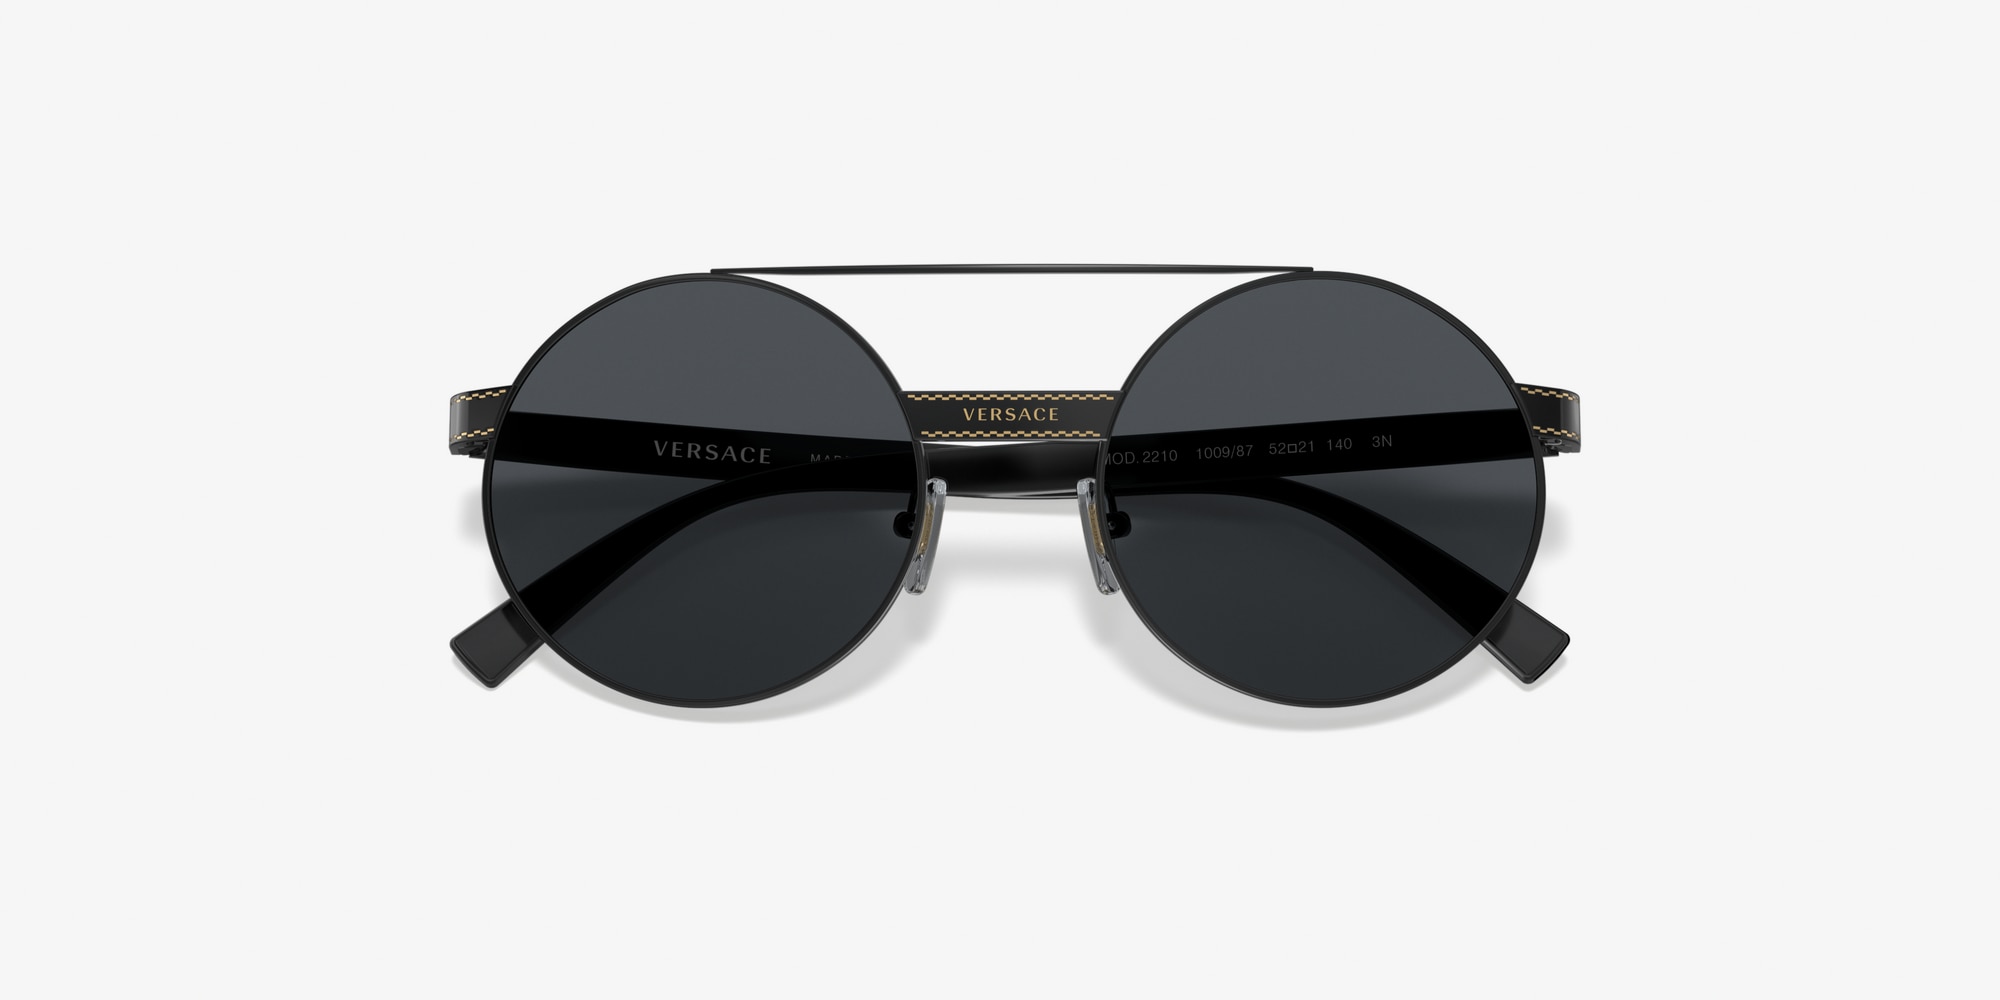 versace 2210 sunglasses